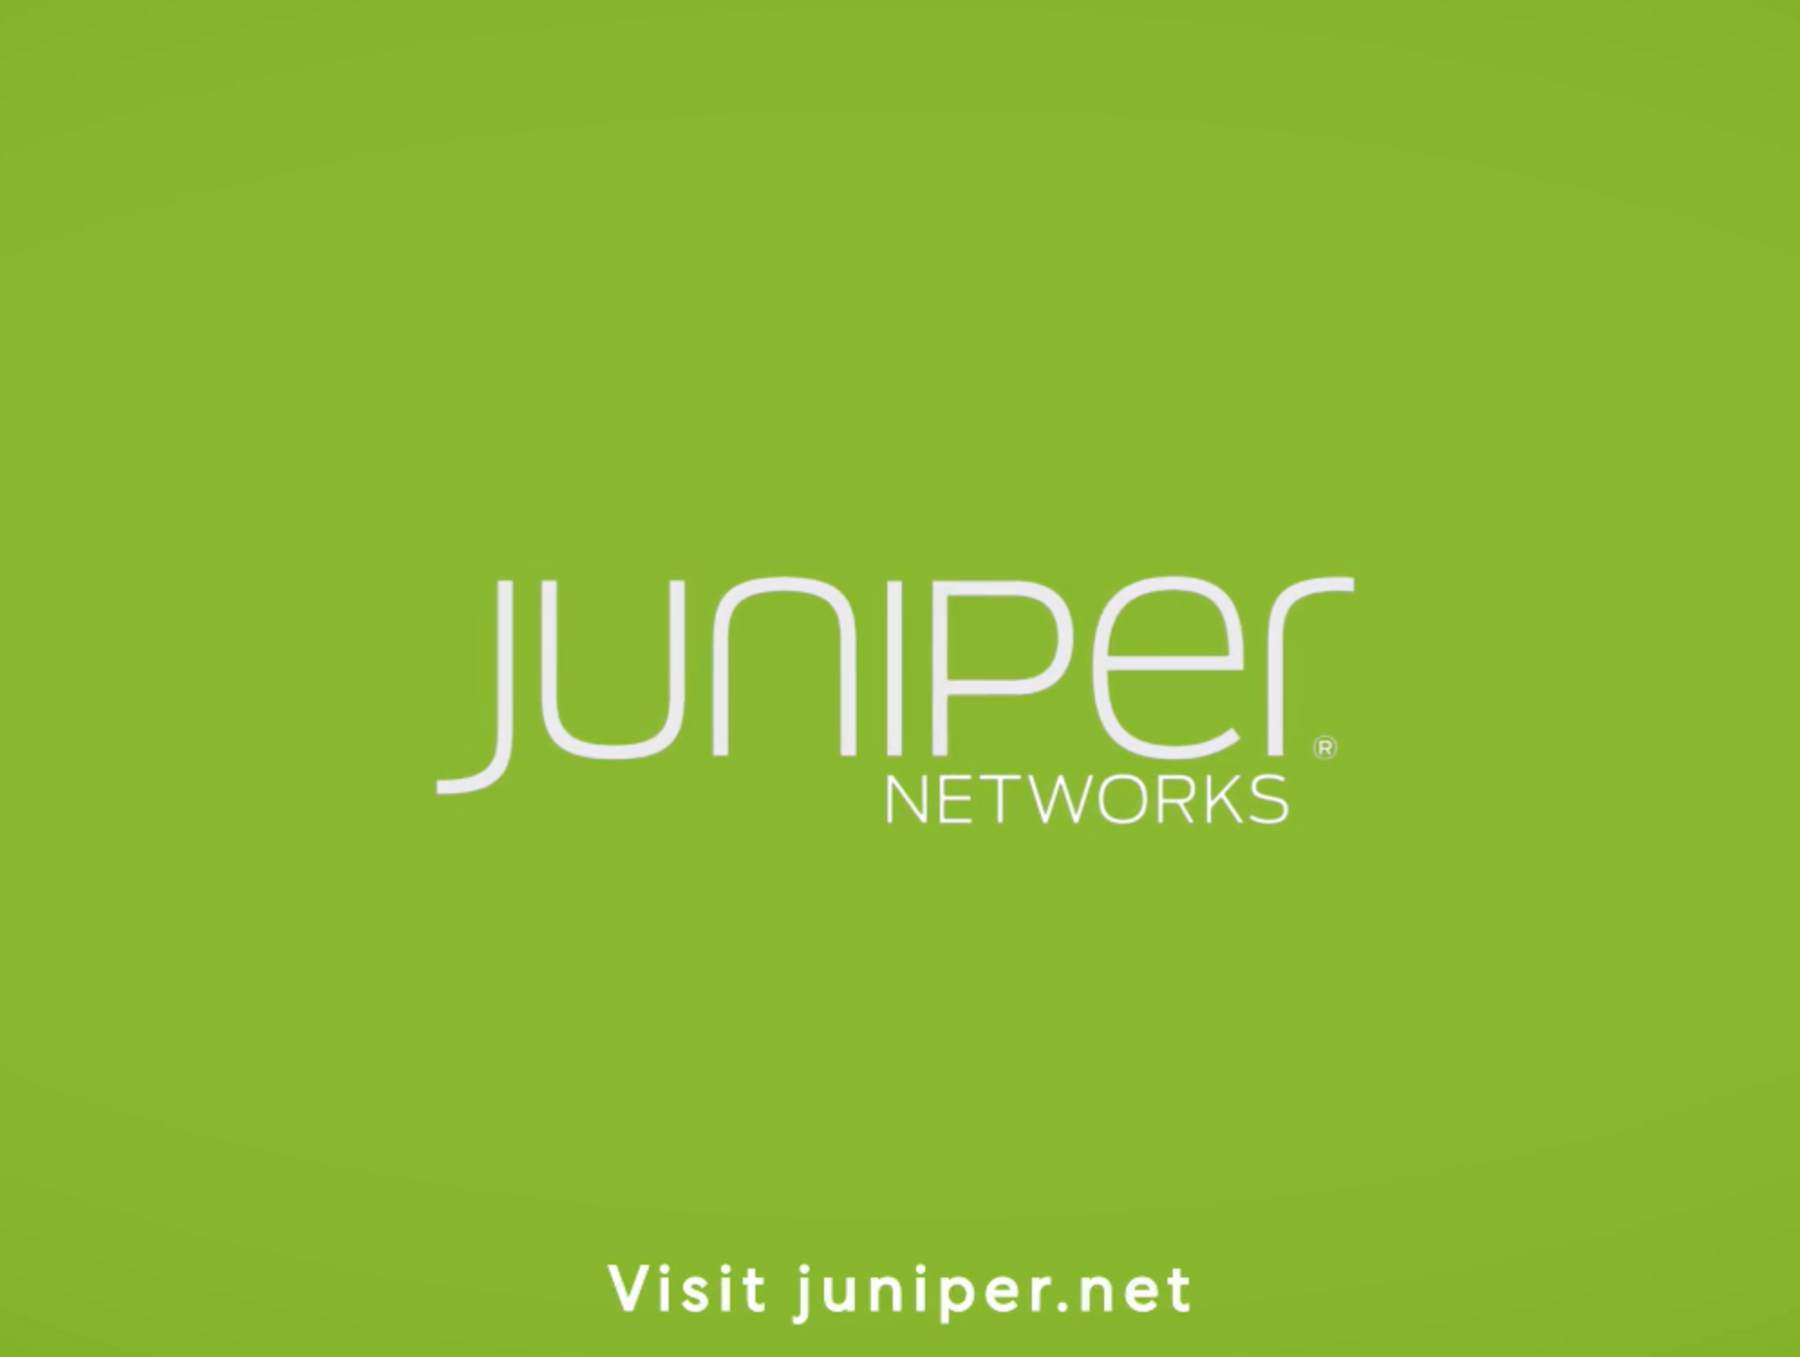 Juniper networks information adventist home health glendale ca